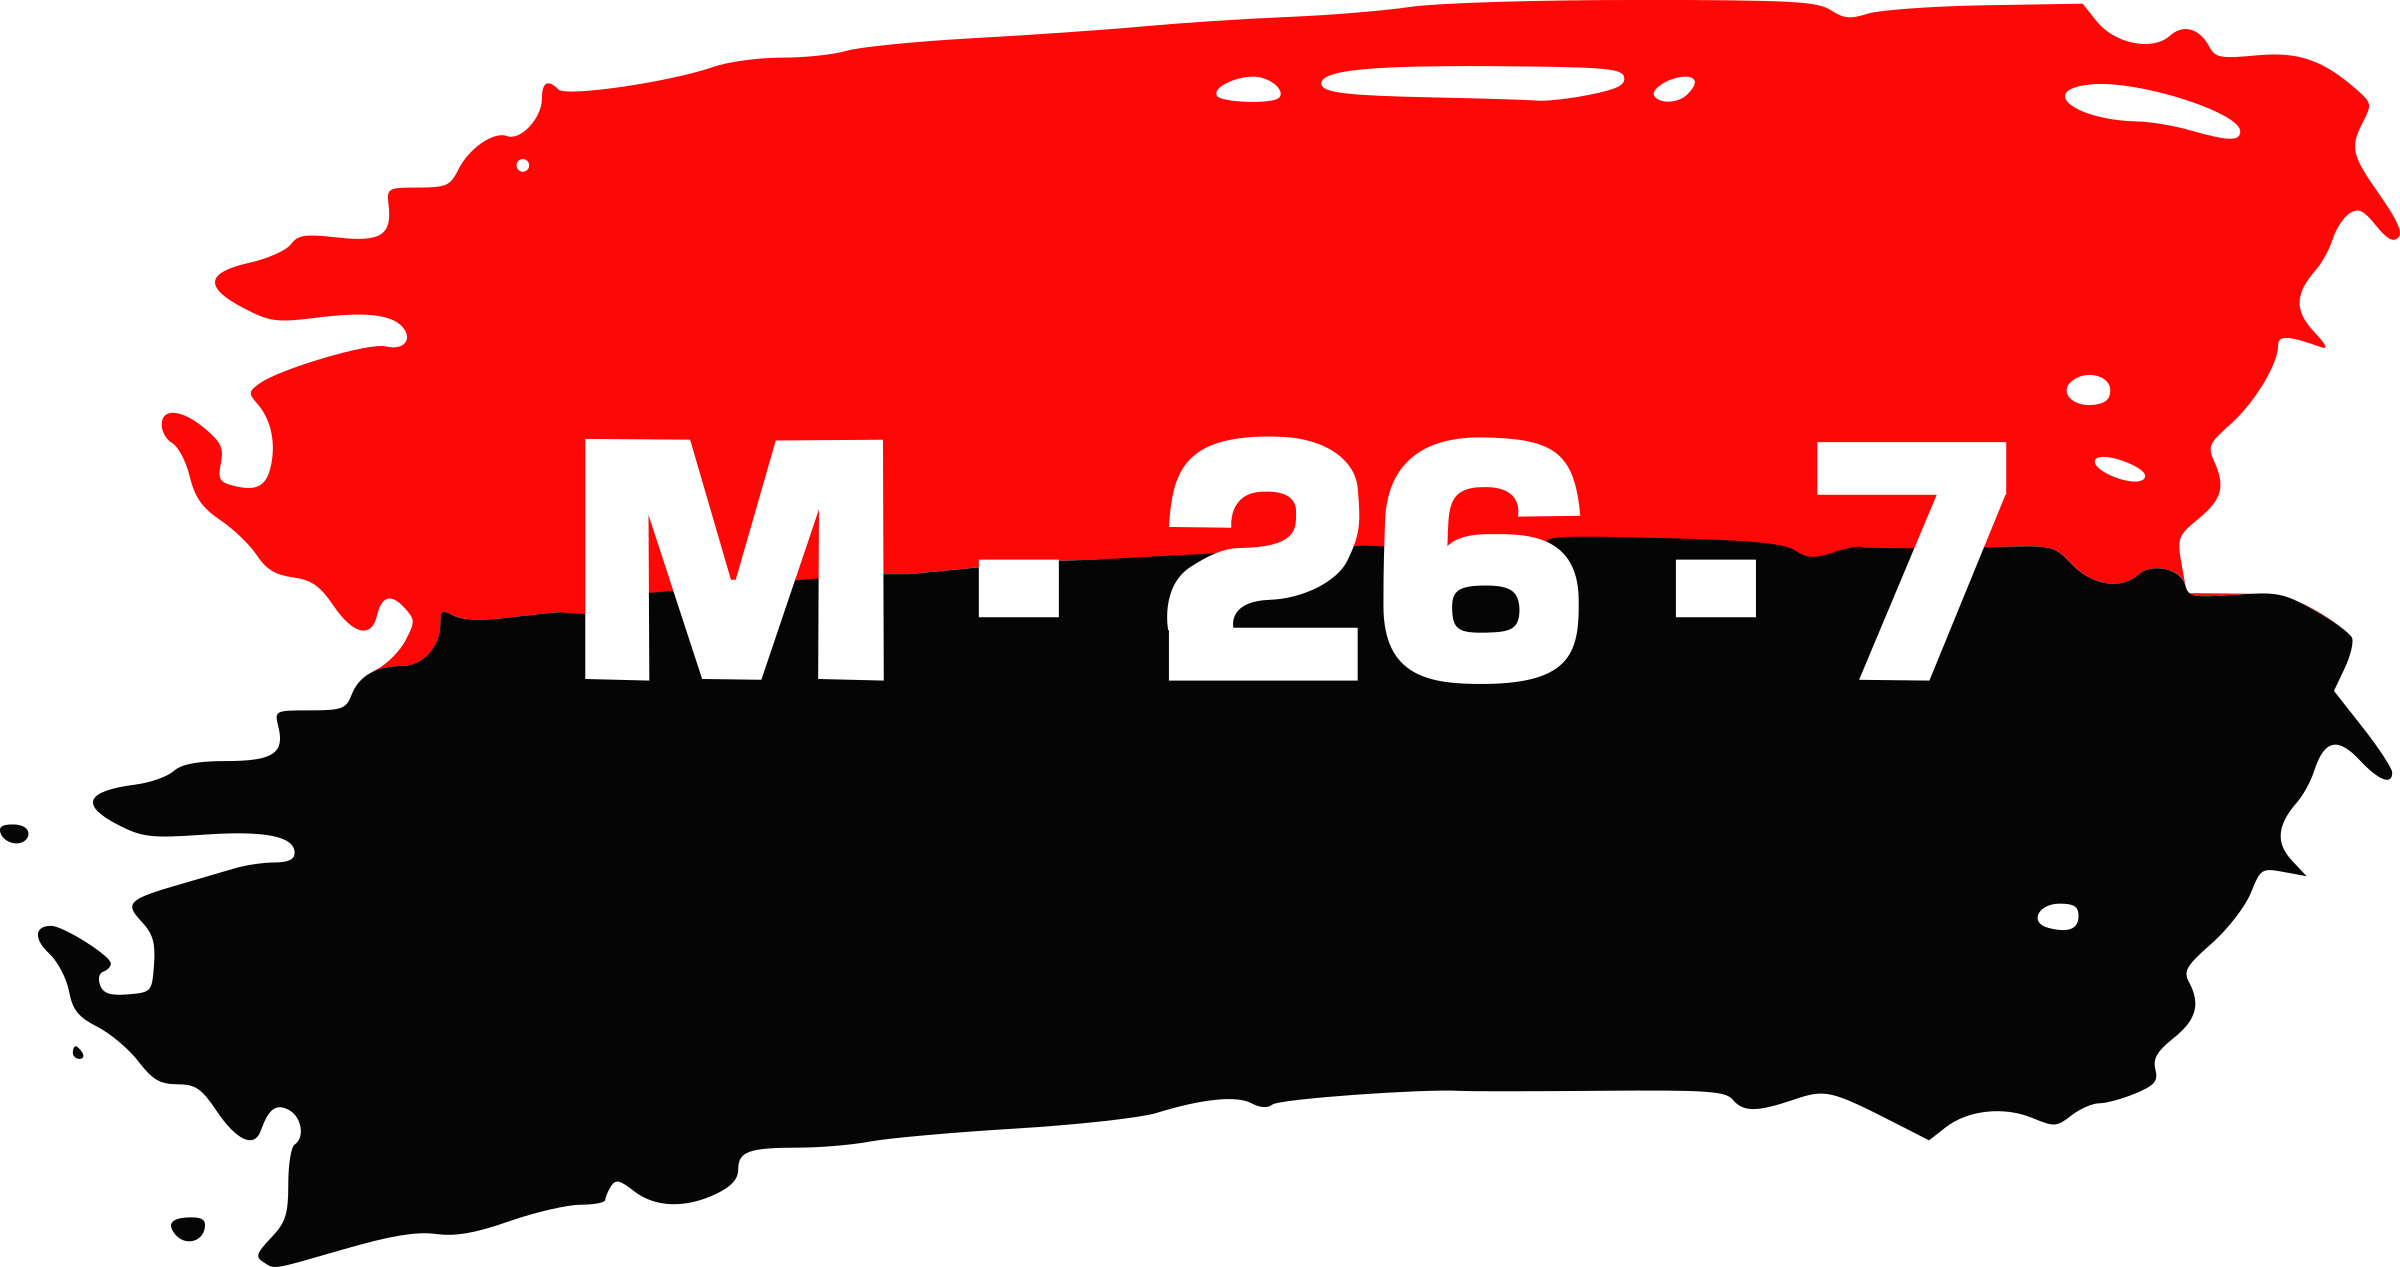 Get Notified Of Exclusive Freebies - M 26 7 Cuba (2400x1267)